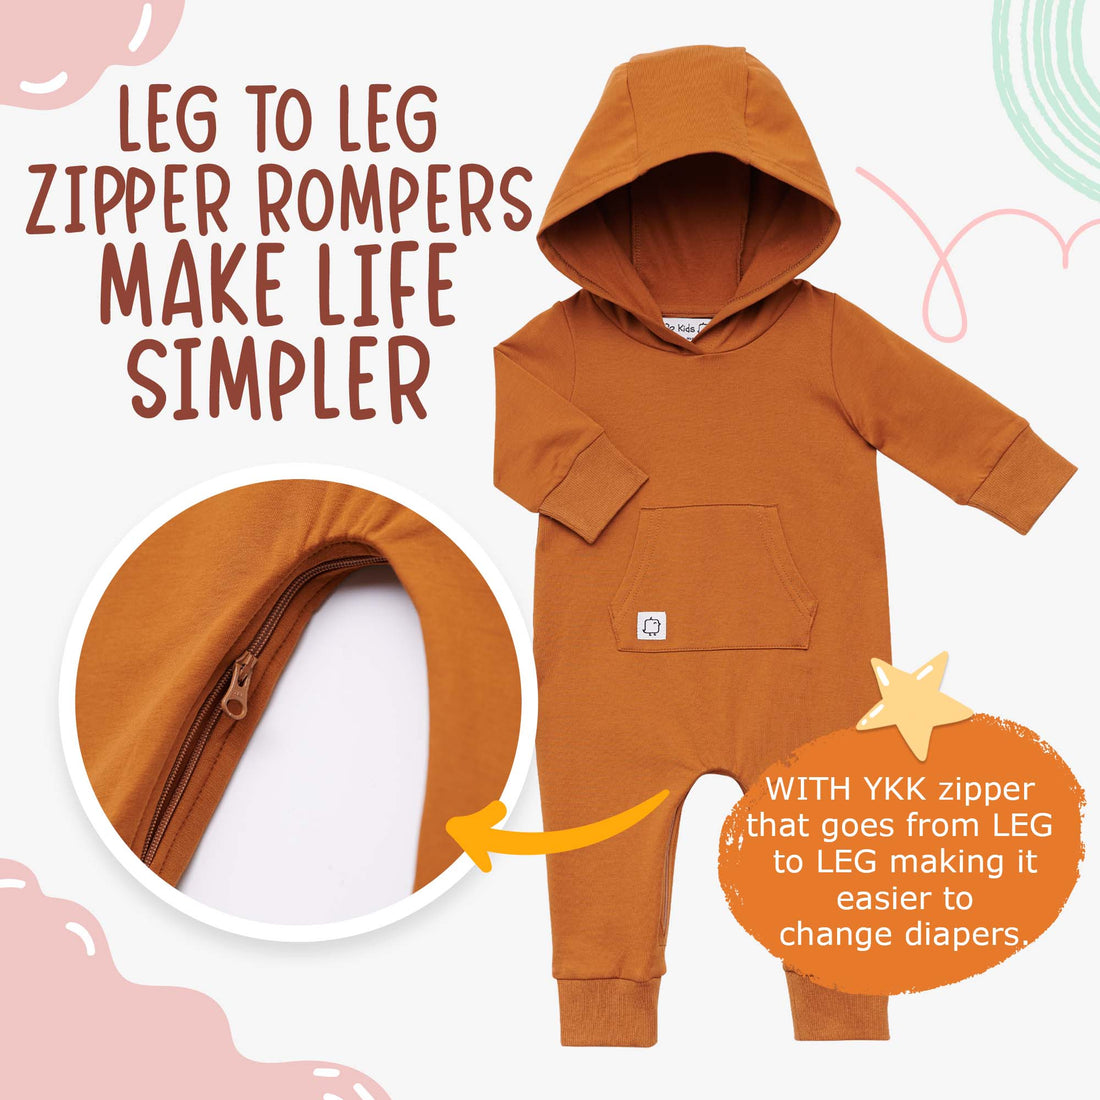 Why use Leg to Leg Zipper Romper